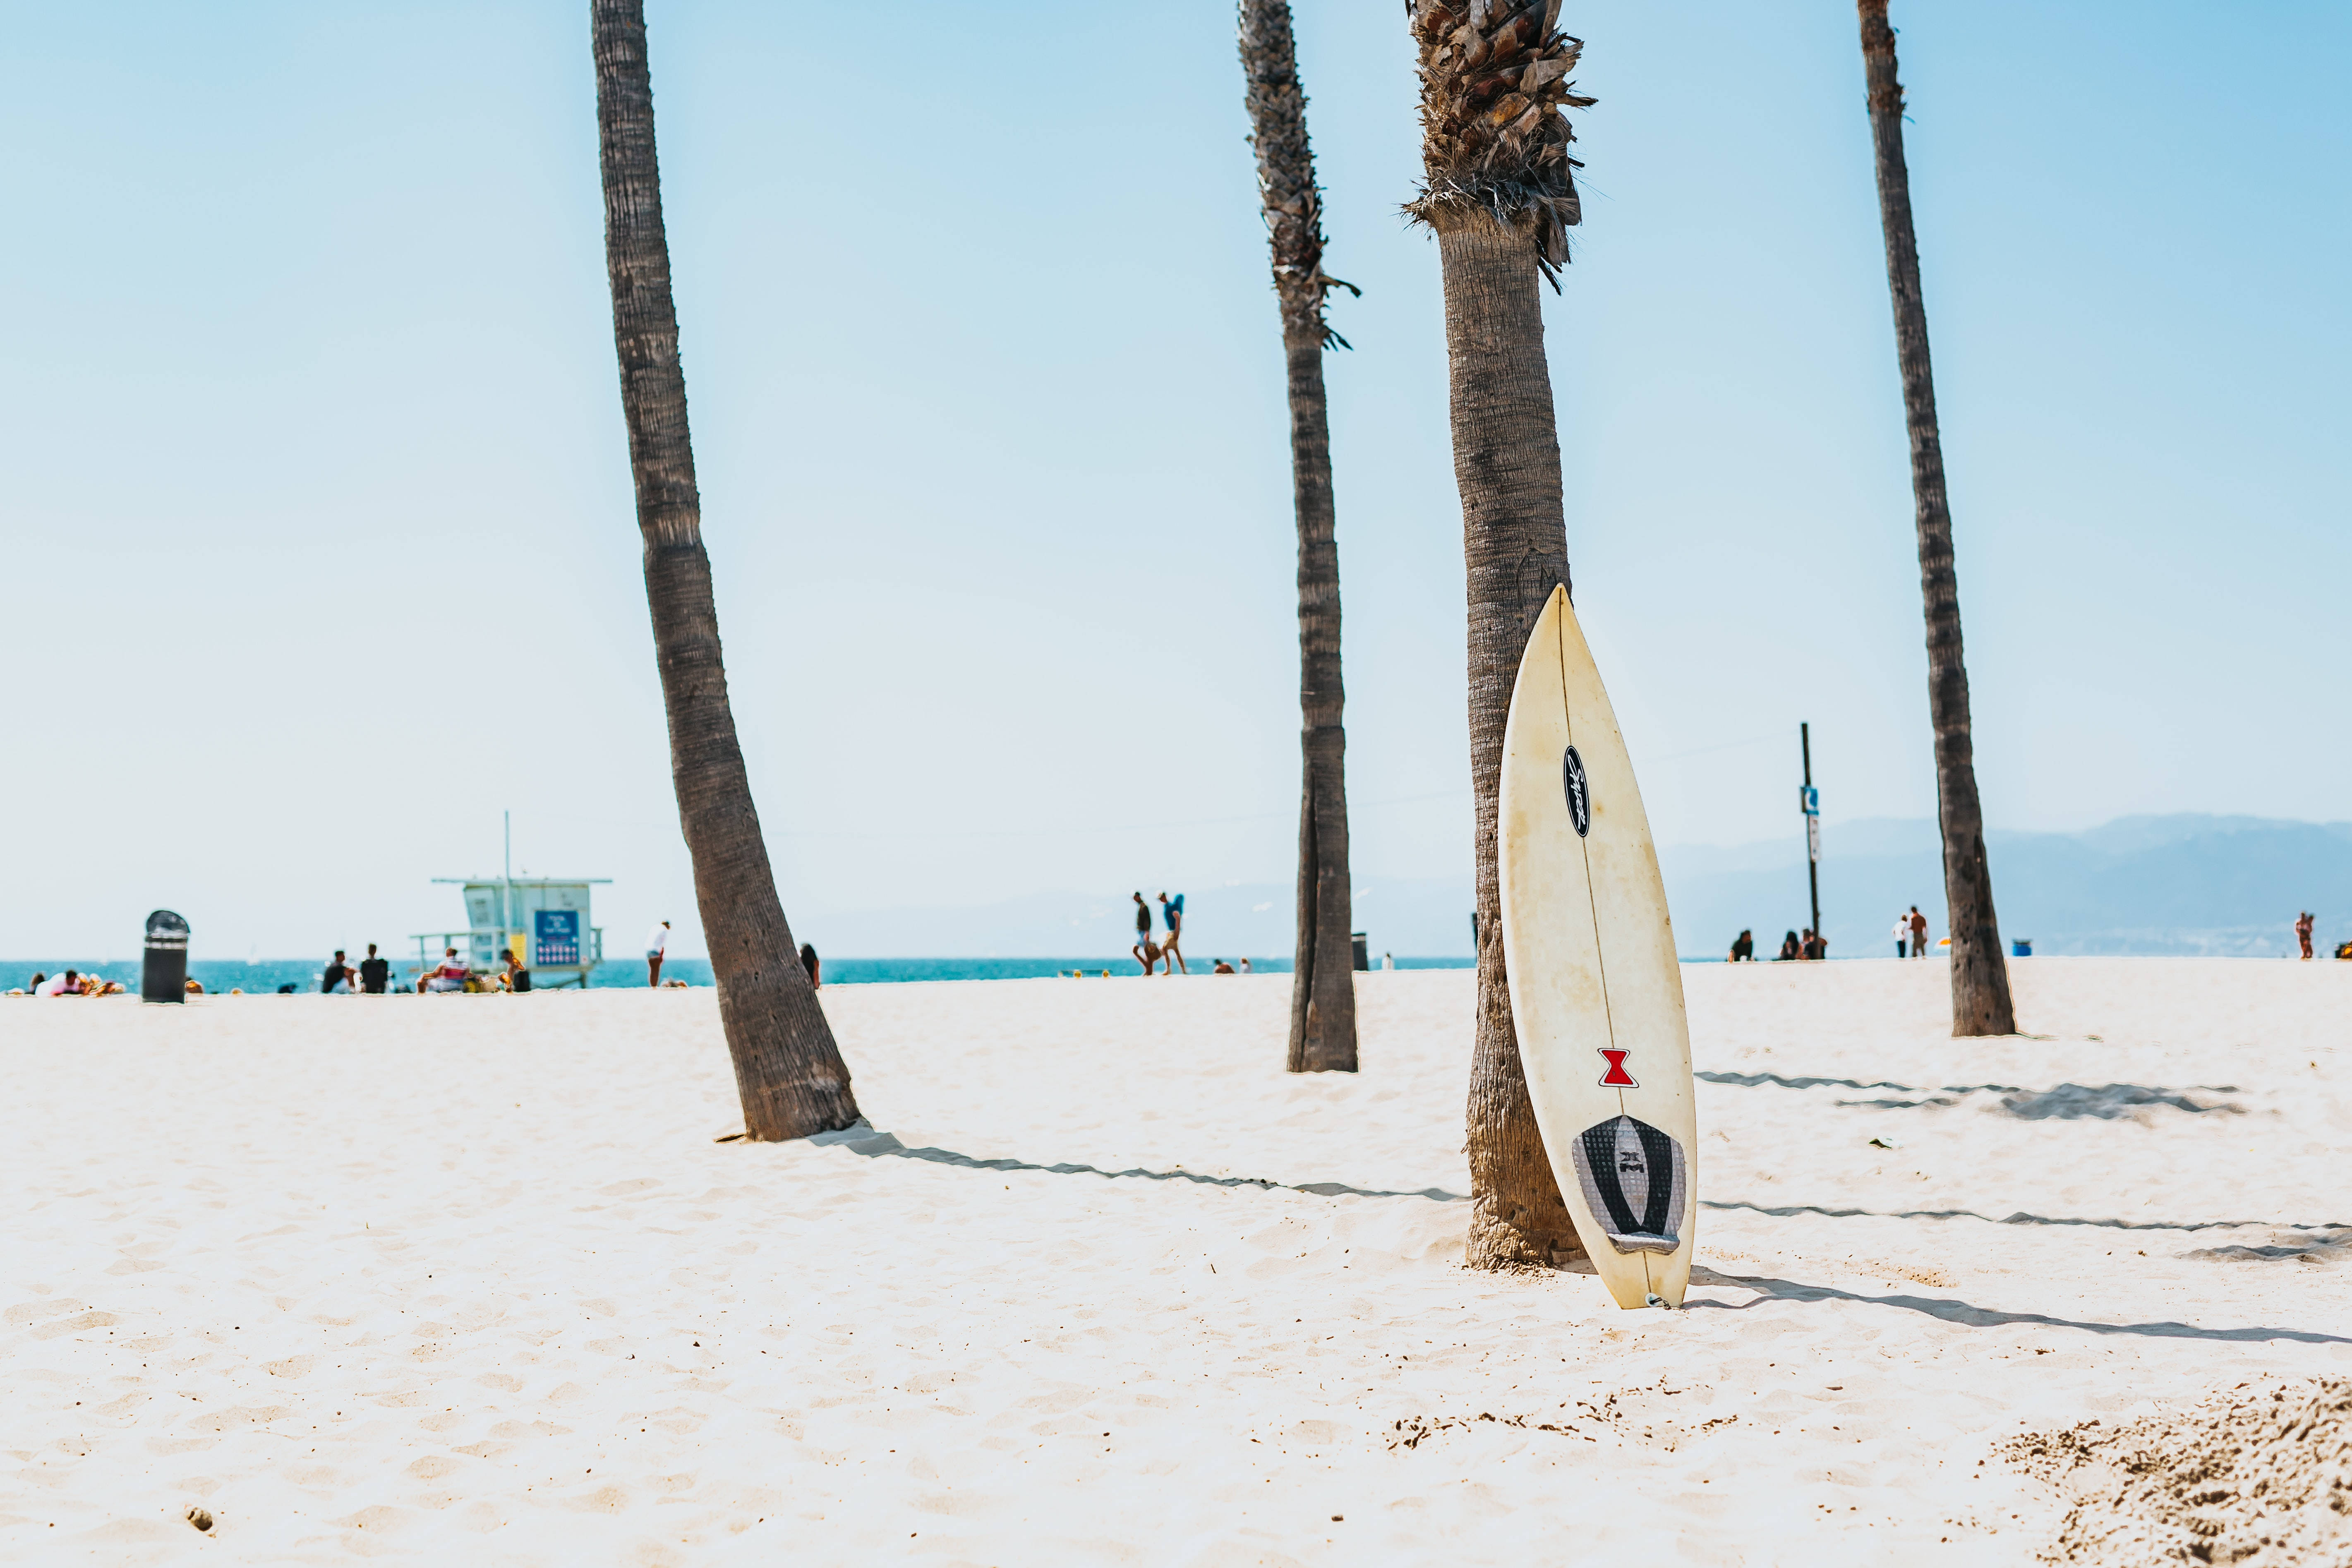 1920x1080 Hd Beach Desktop Surfboard And Palm Tree Wallpaper